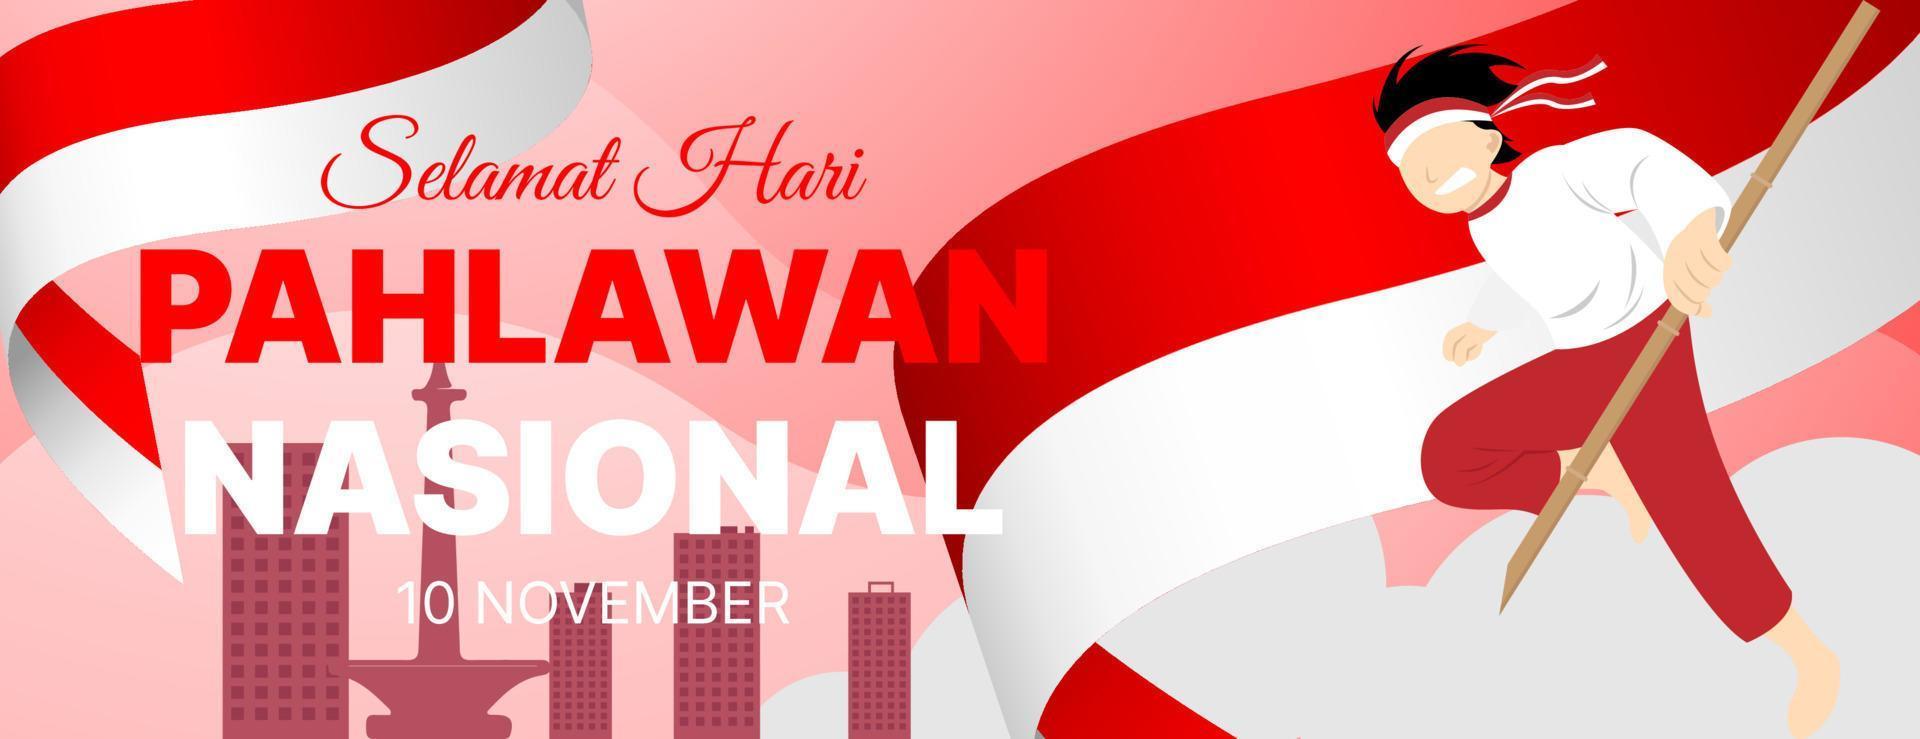 Selamat hari pahlawan nasional or indonesian national heroes day banner background vector